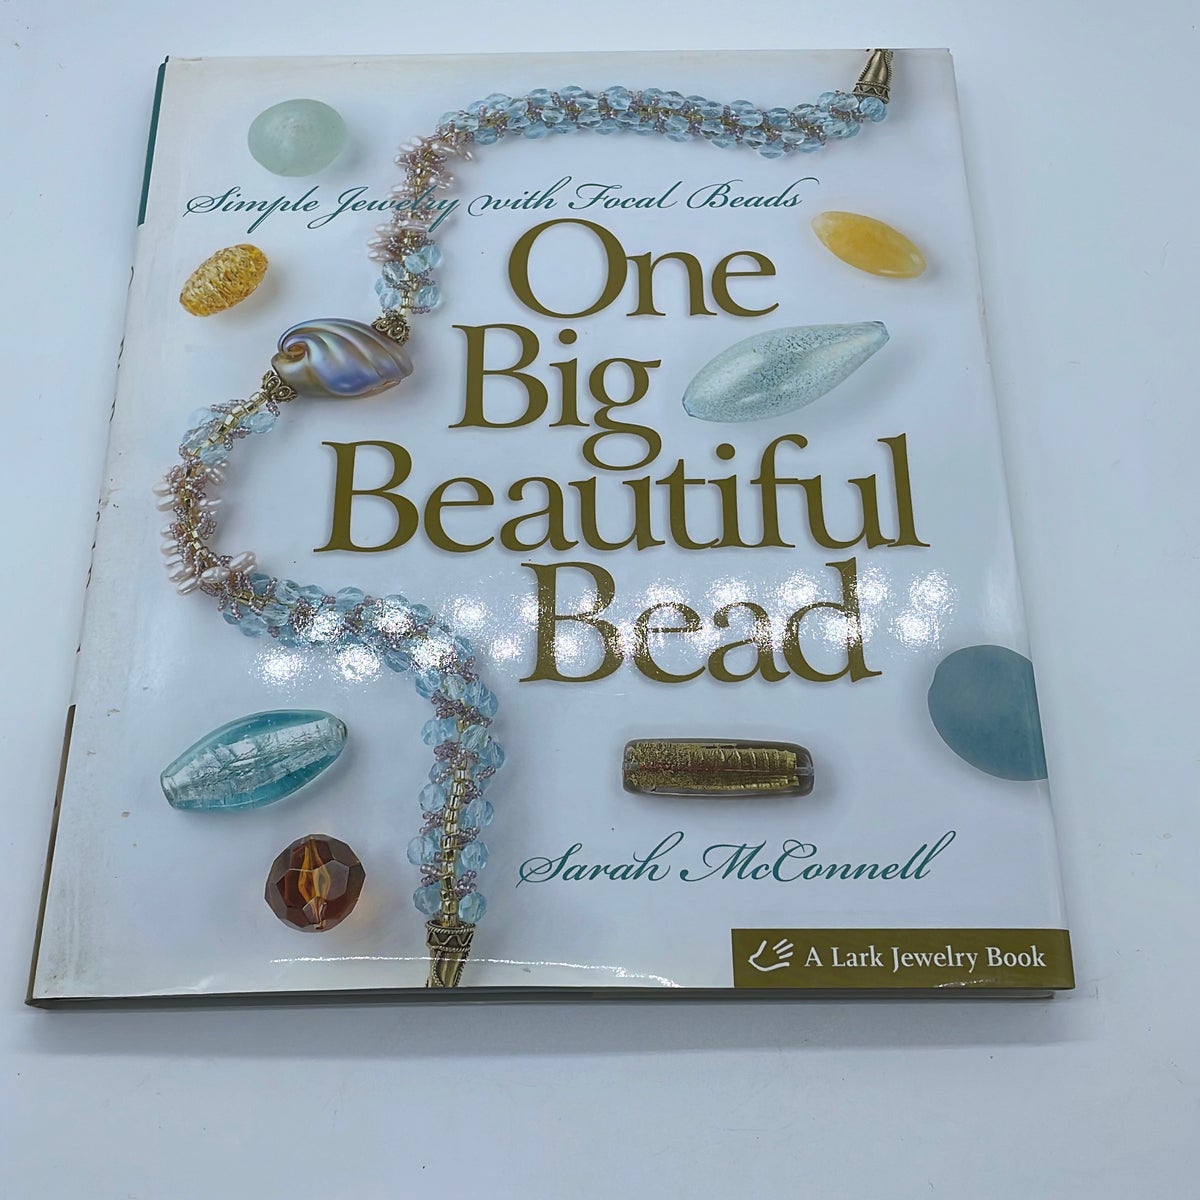 Big Book of Beautiful Beads